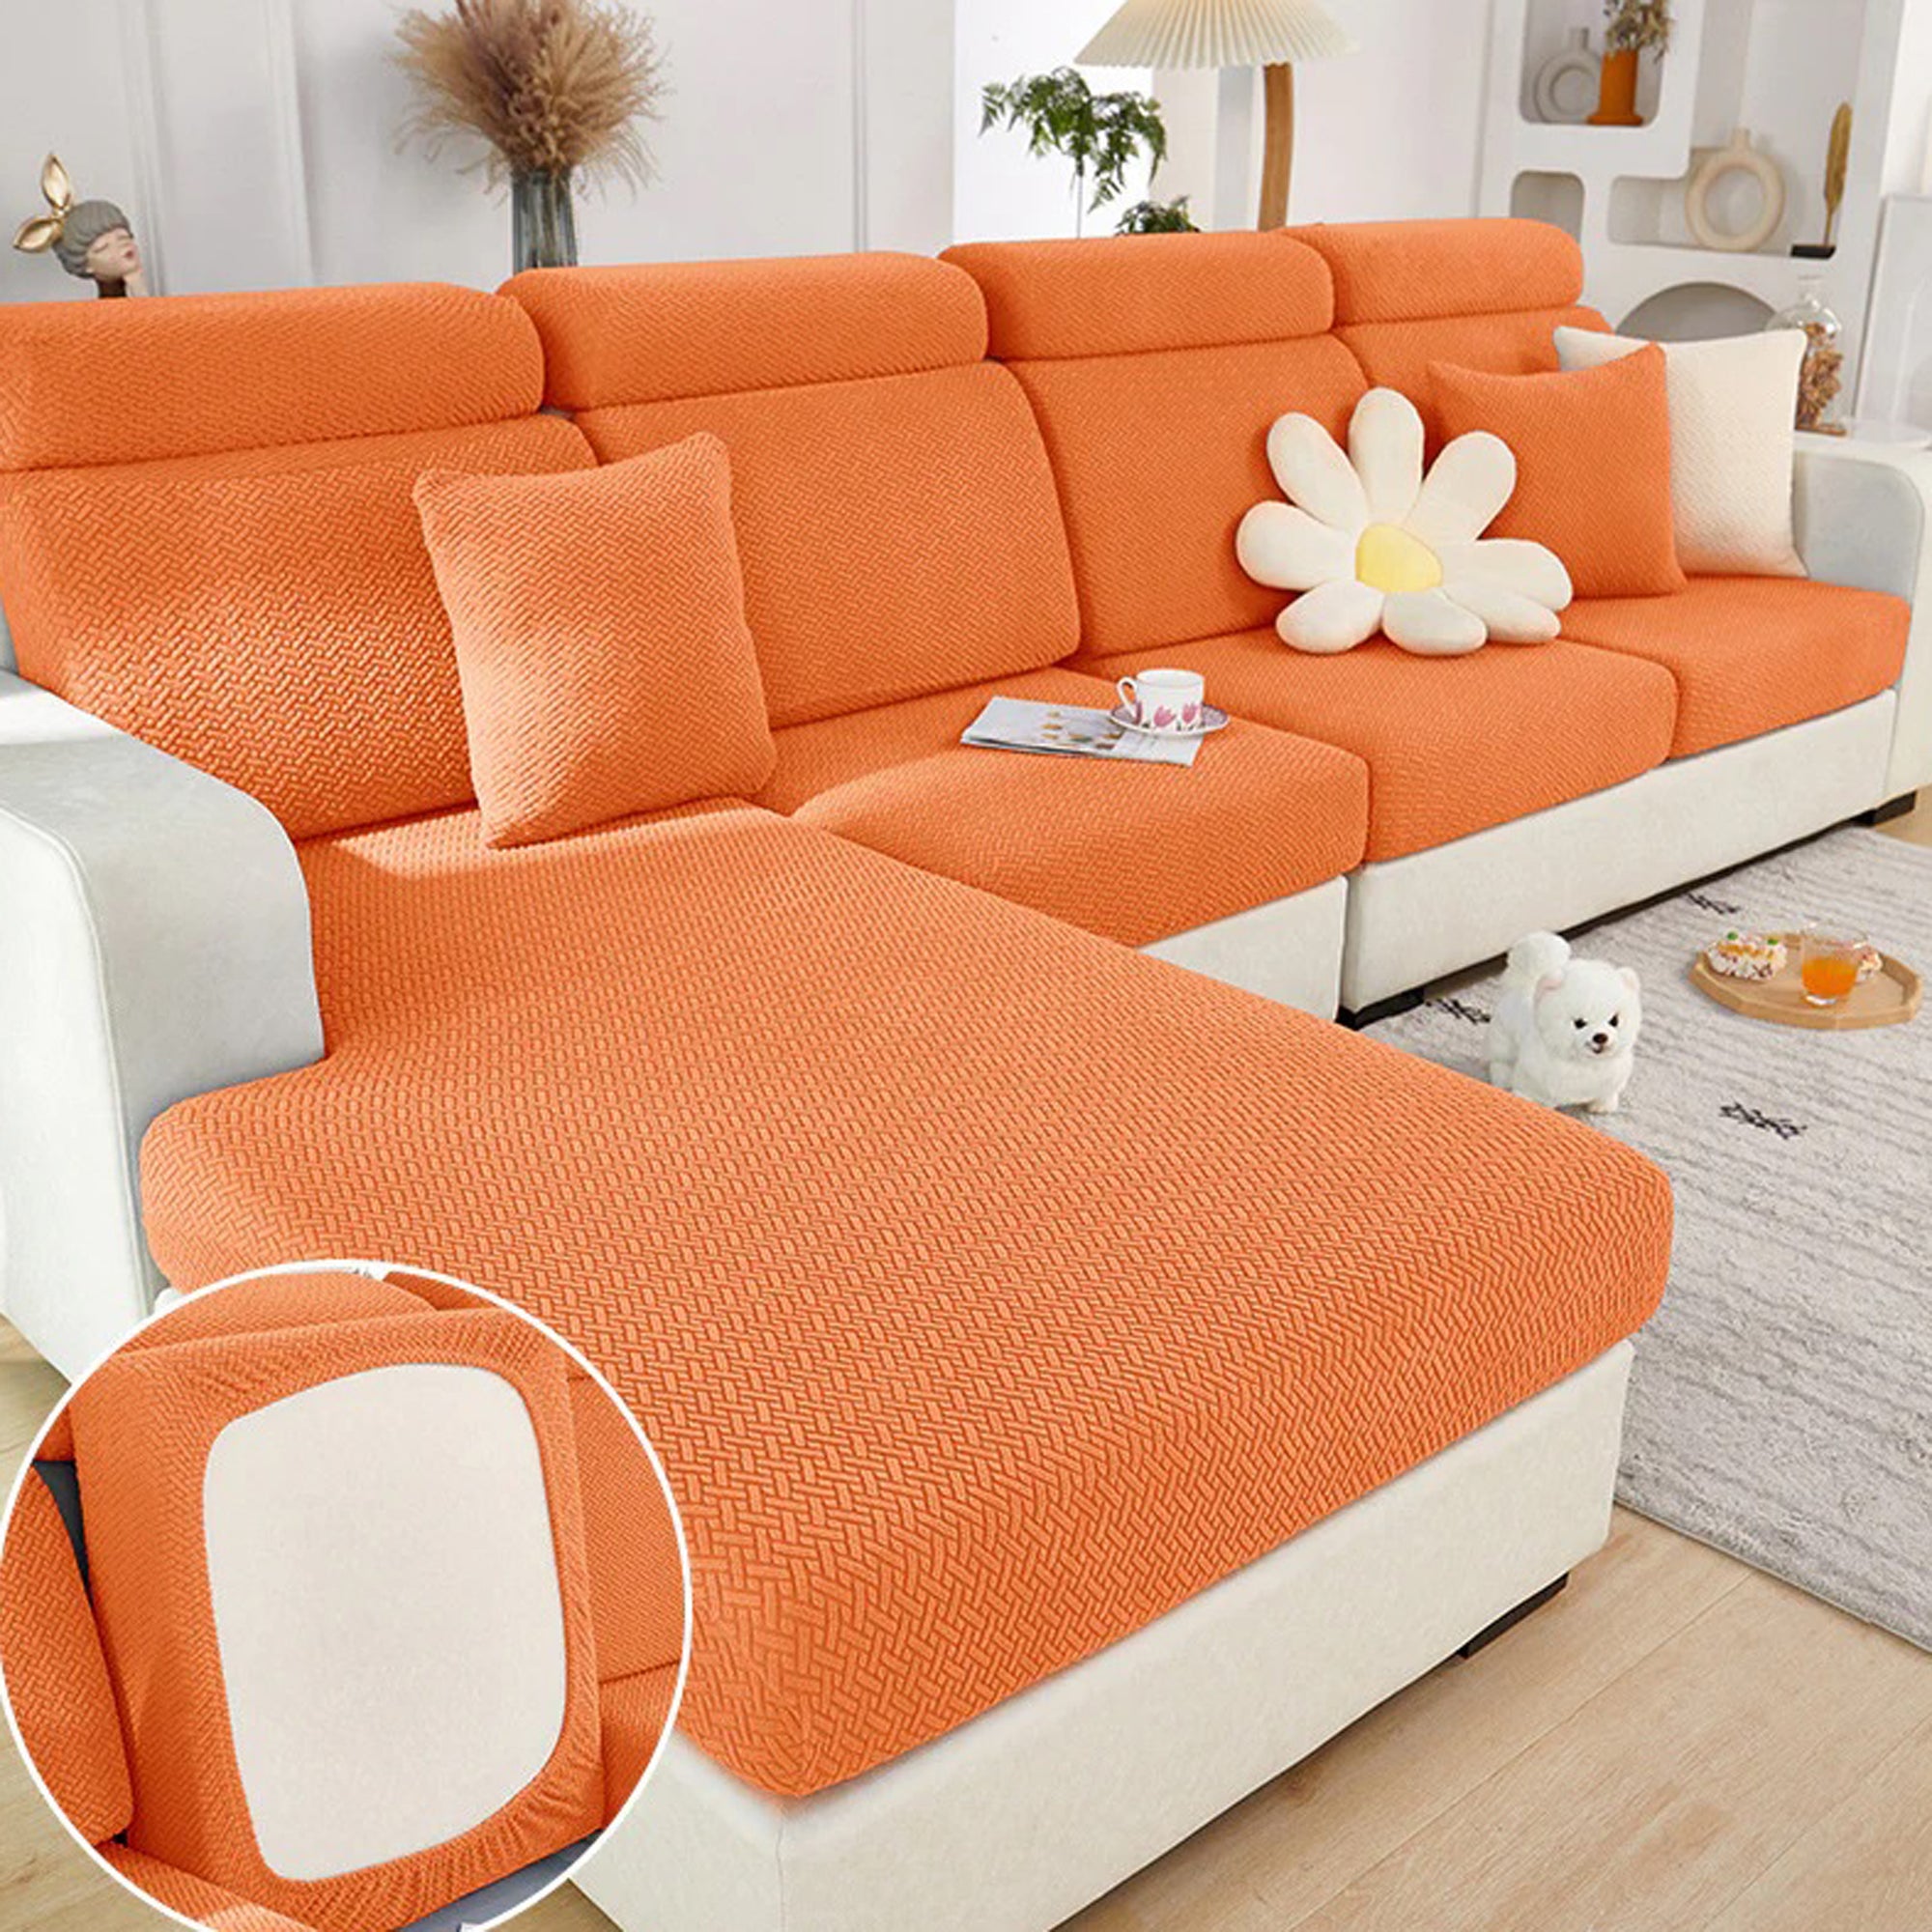 Sofa Cover Patterns: How to Match Your Room Decor - Nolan Interior